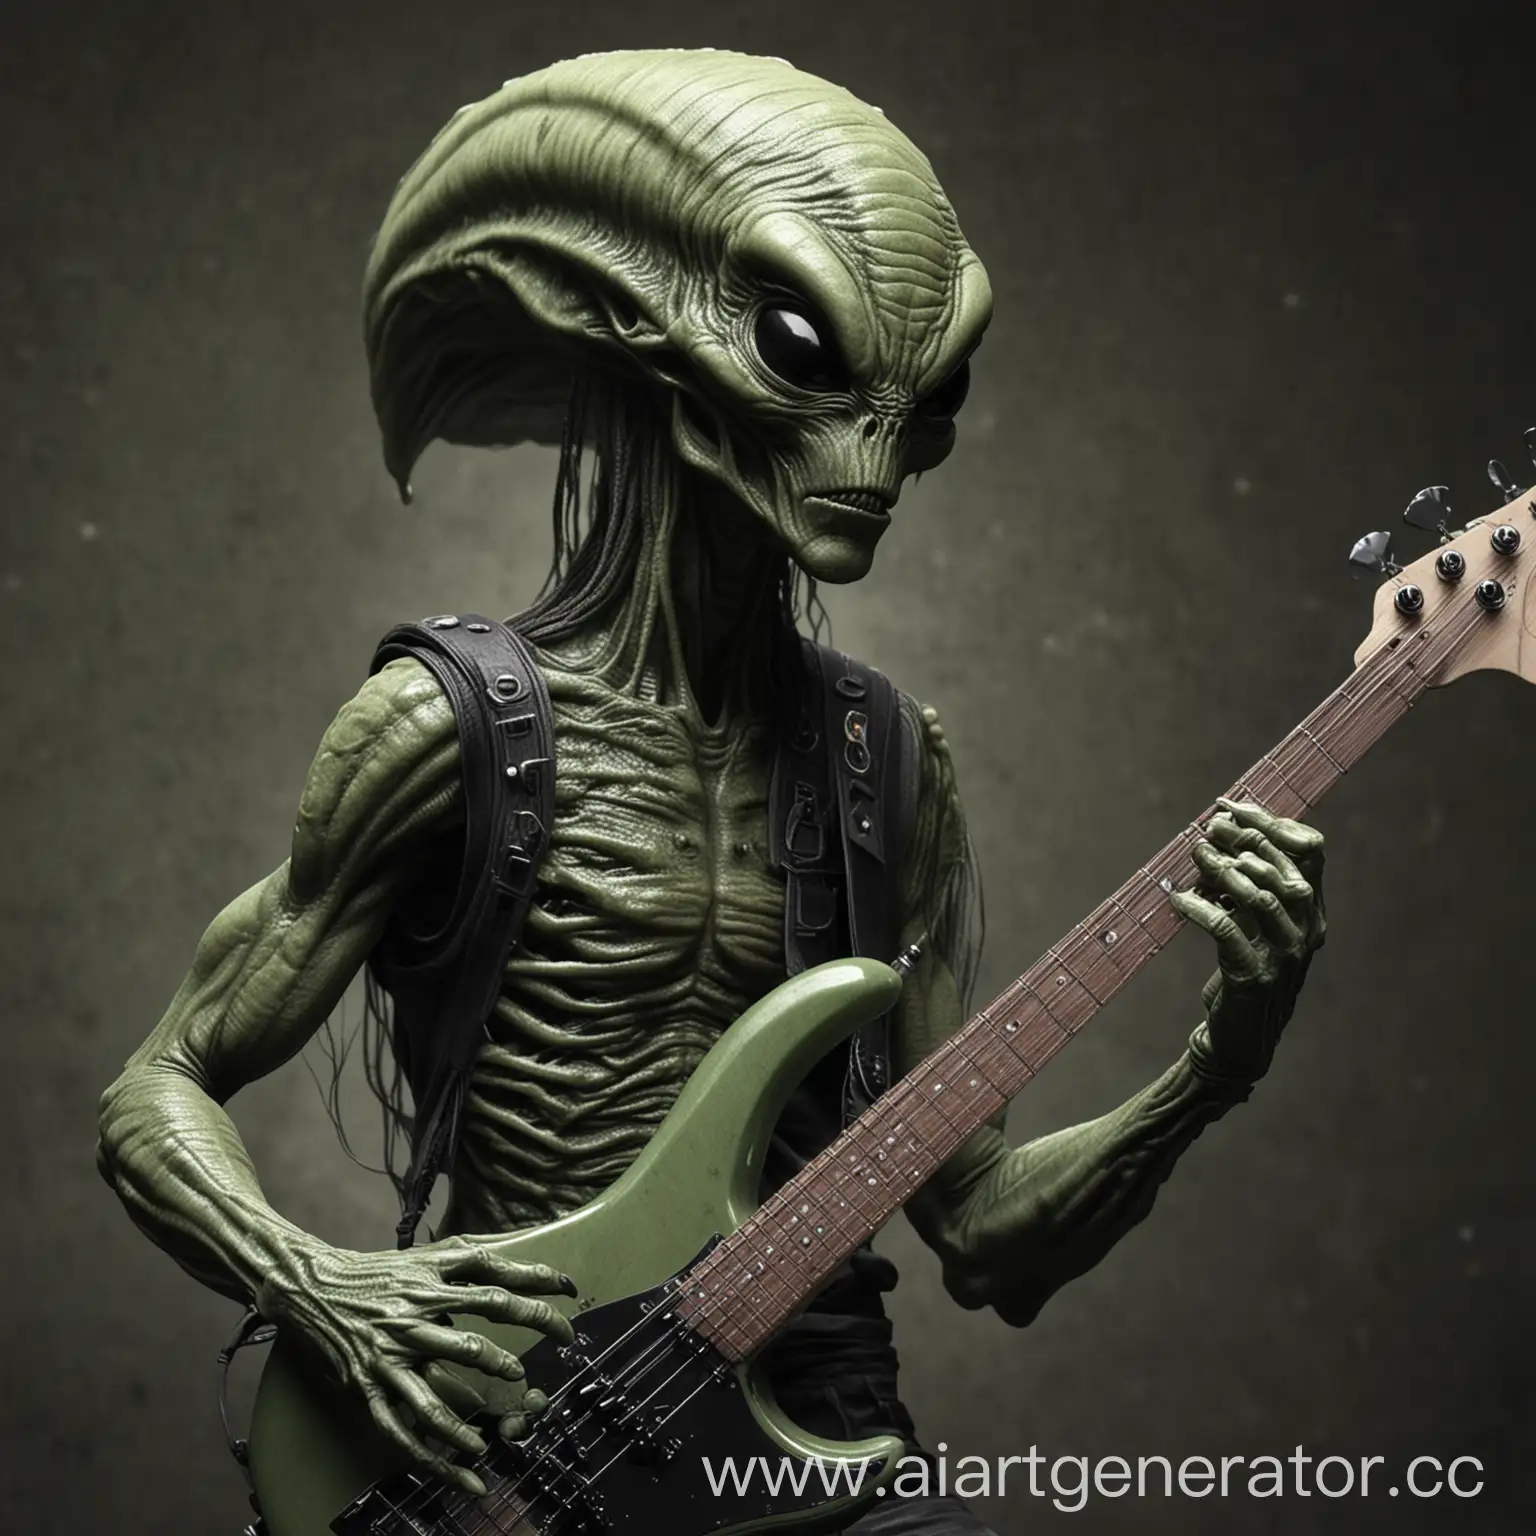 Alien-Bassist-Playing-Cosmic-Tunes